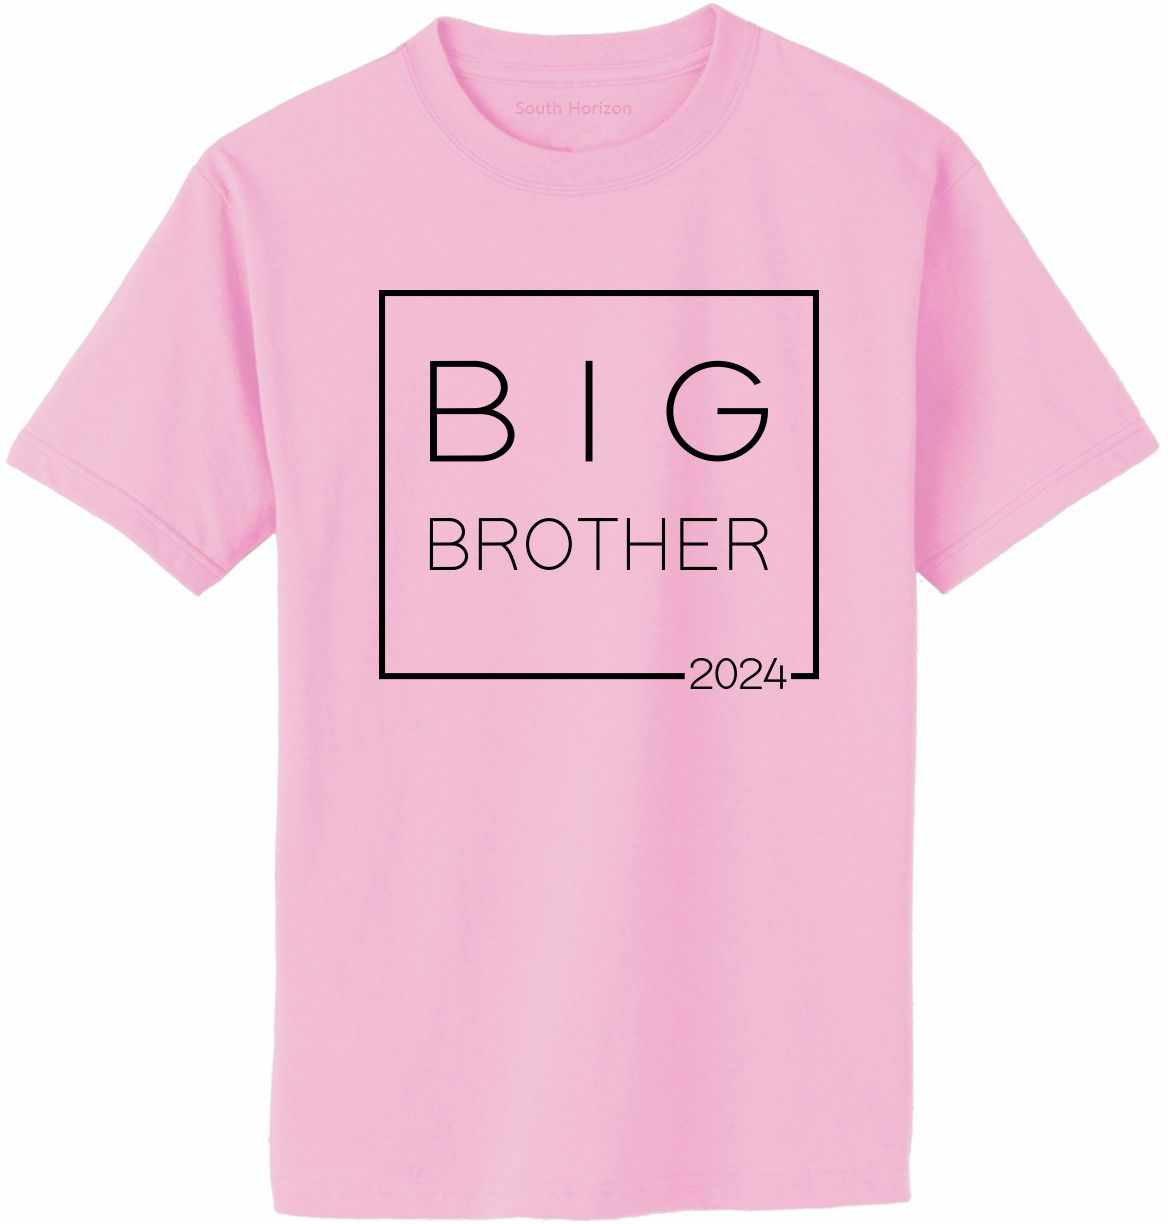 Big Brother Box 2024 on Adult T-Shirt